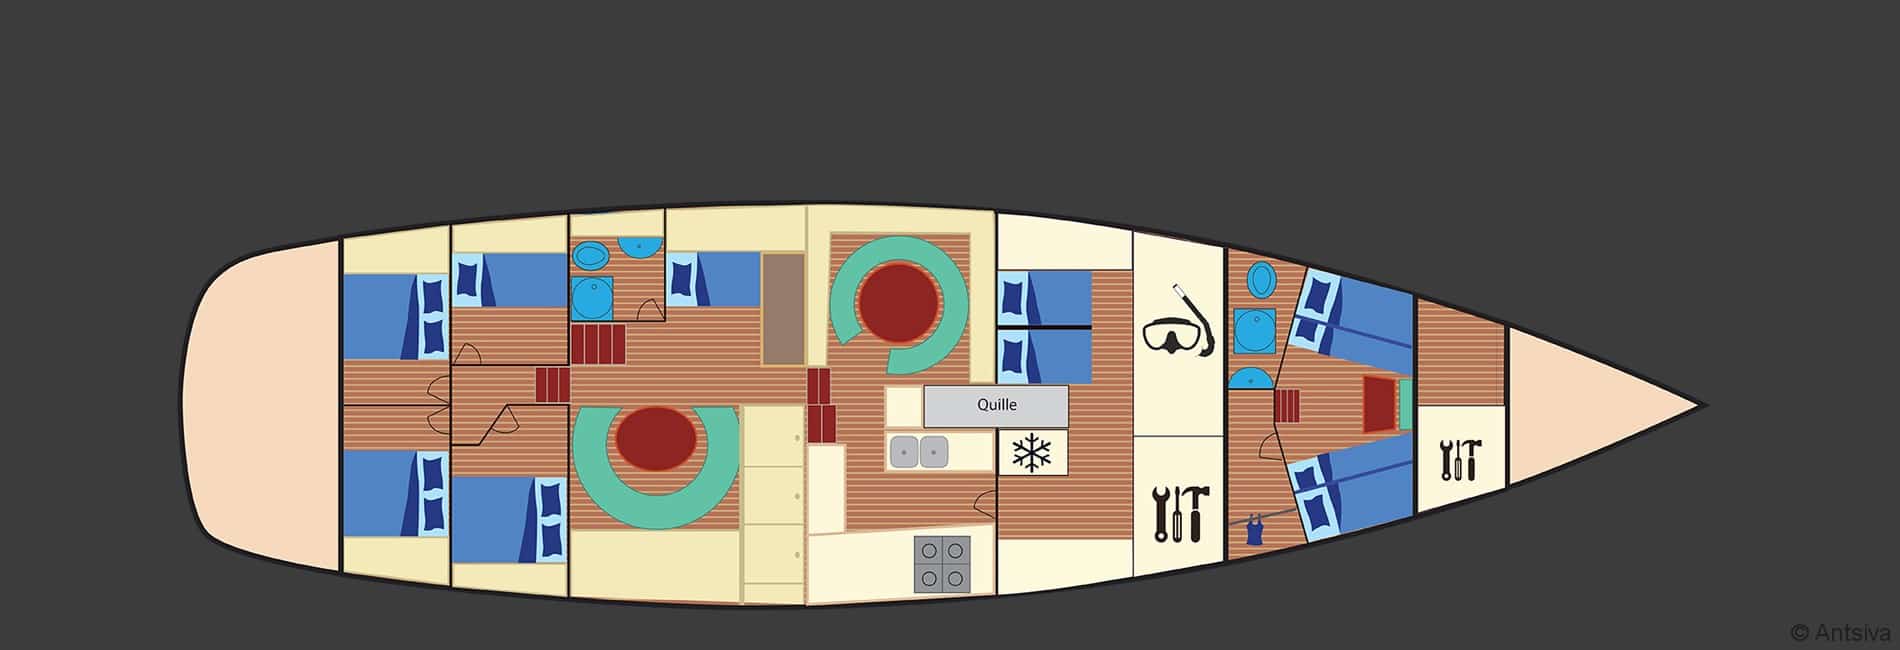 Plan of the boat antsiva